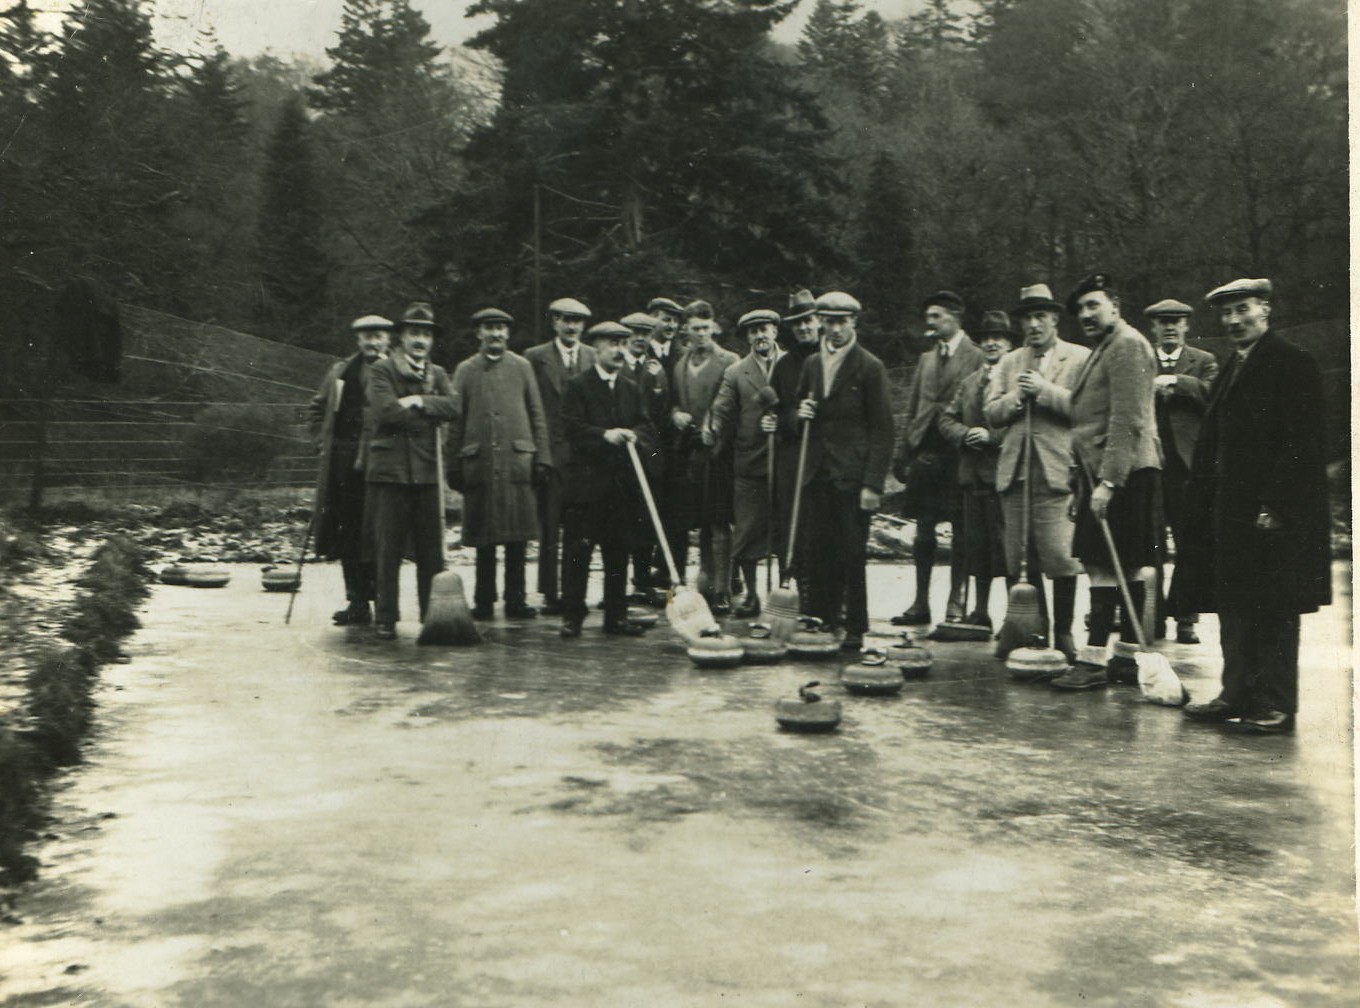 Curling on Ardkinglas Curling Pond